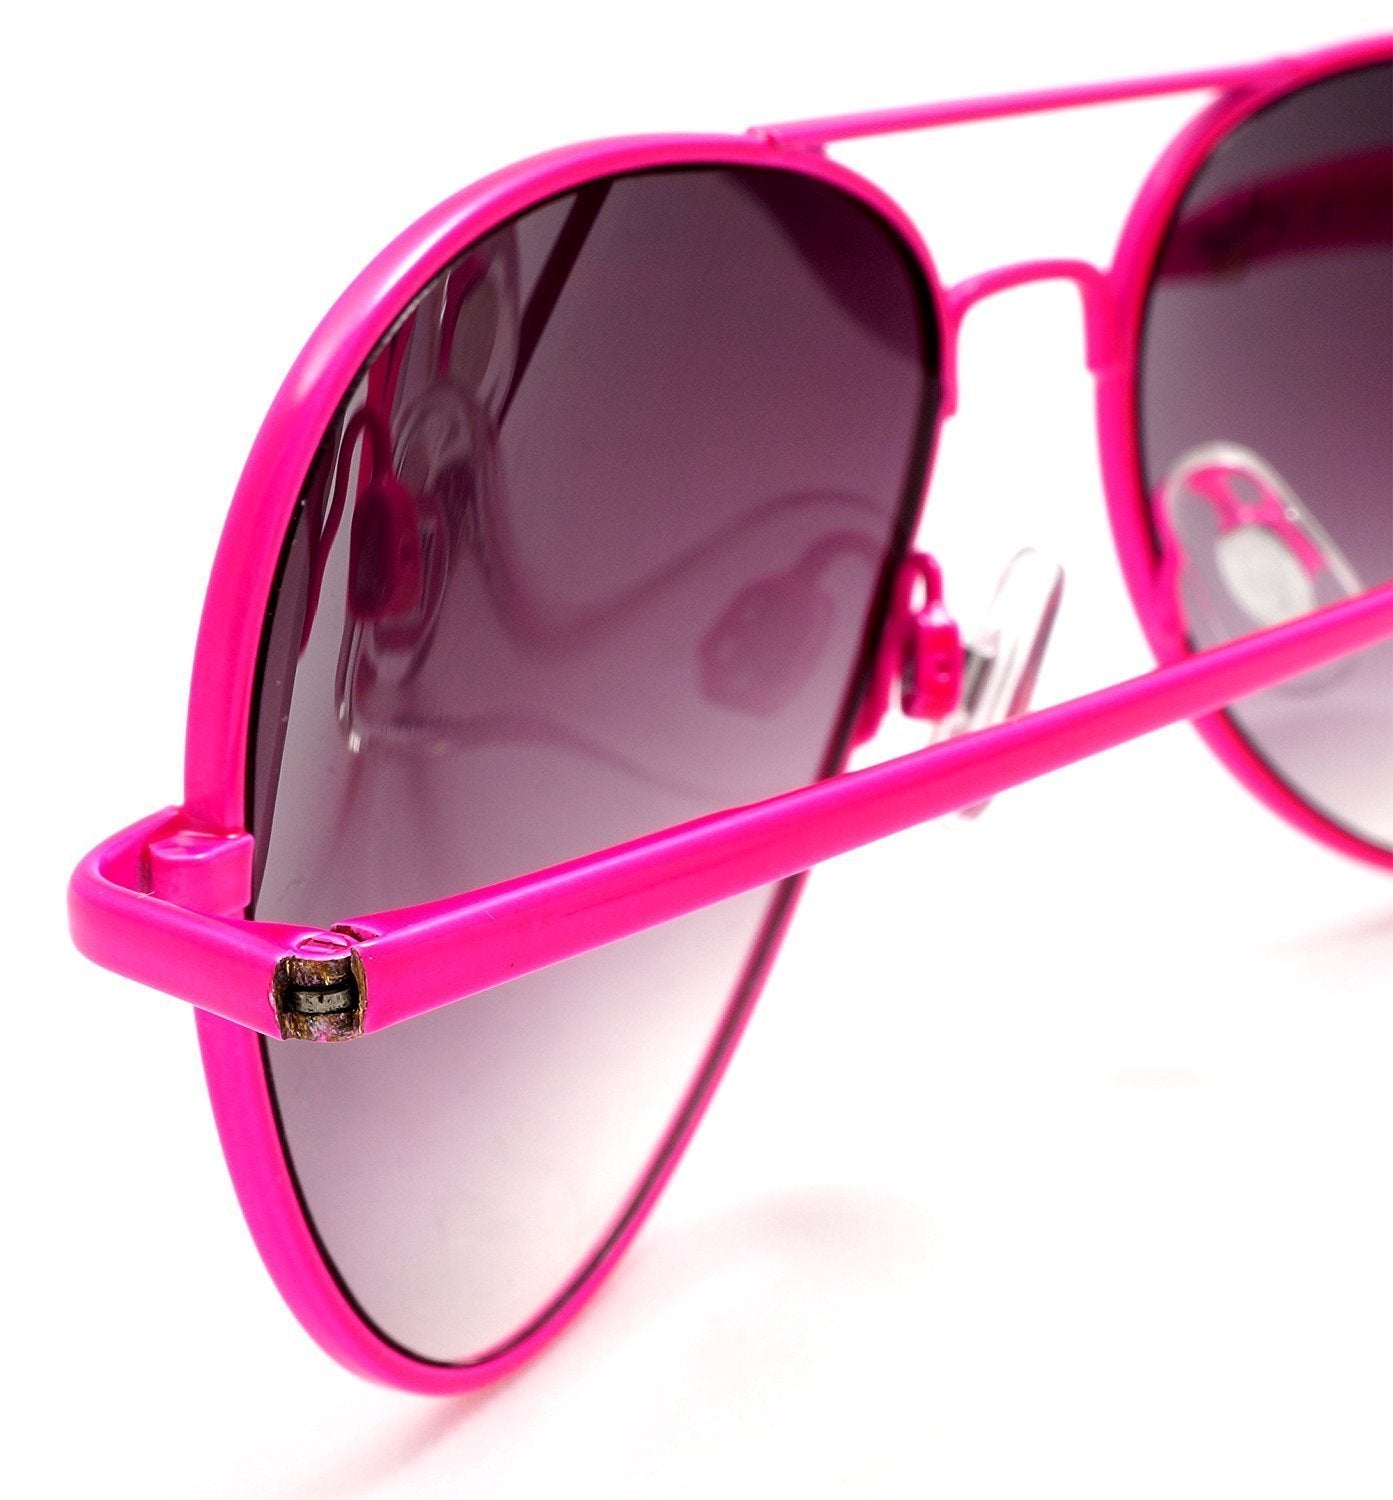 Unisex Pilot Military Neon Classic Sunglasses - Mambo Madness Neon Shades - Pink-Samba Shades